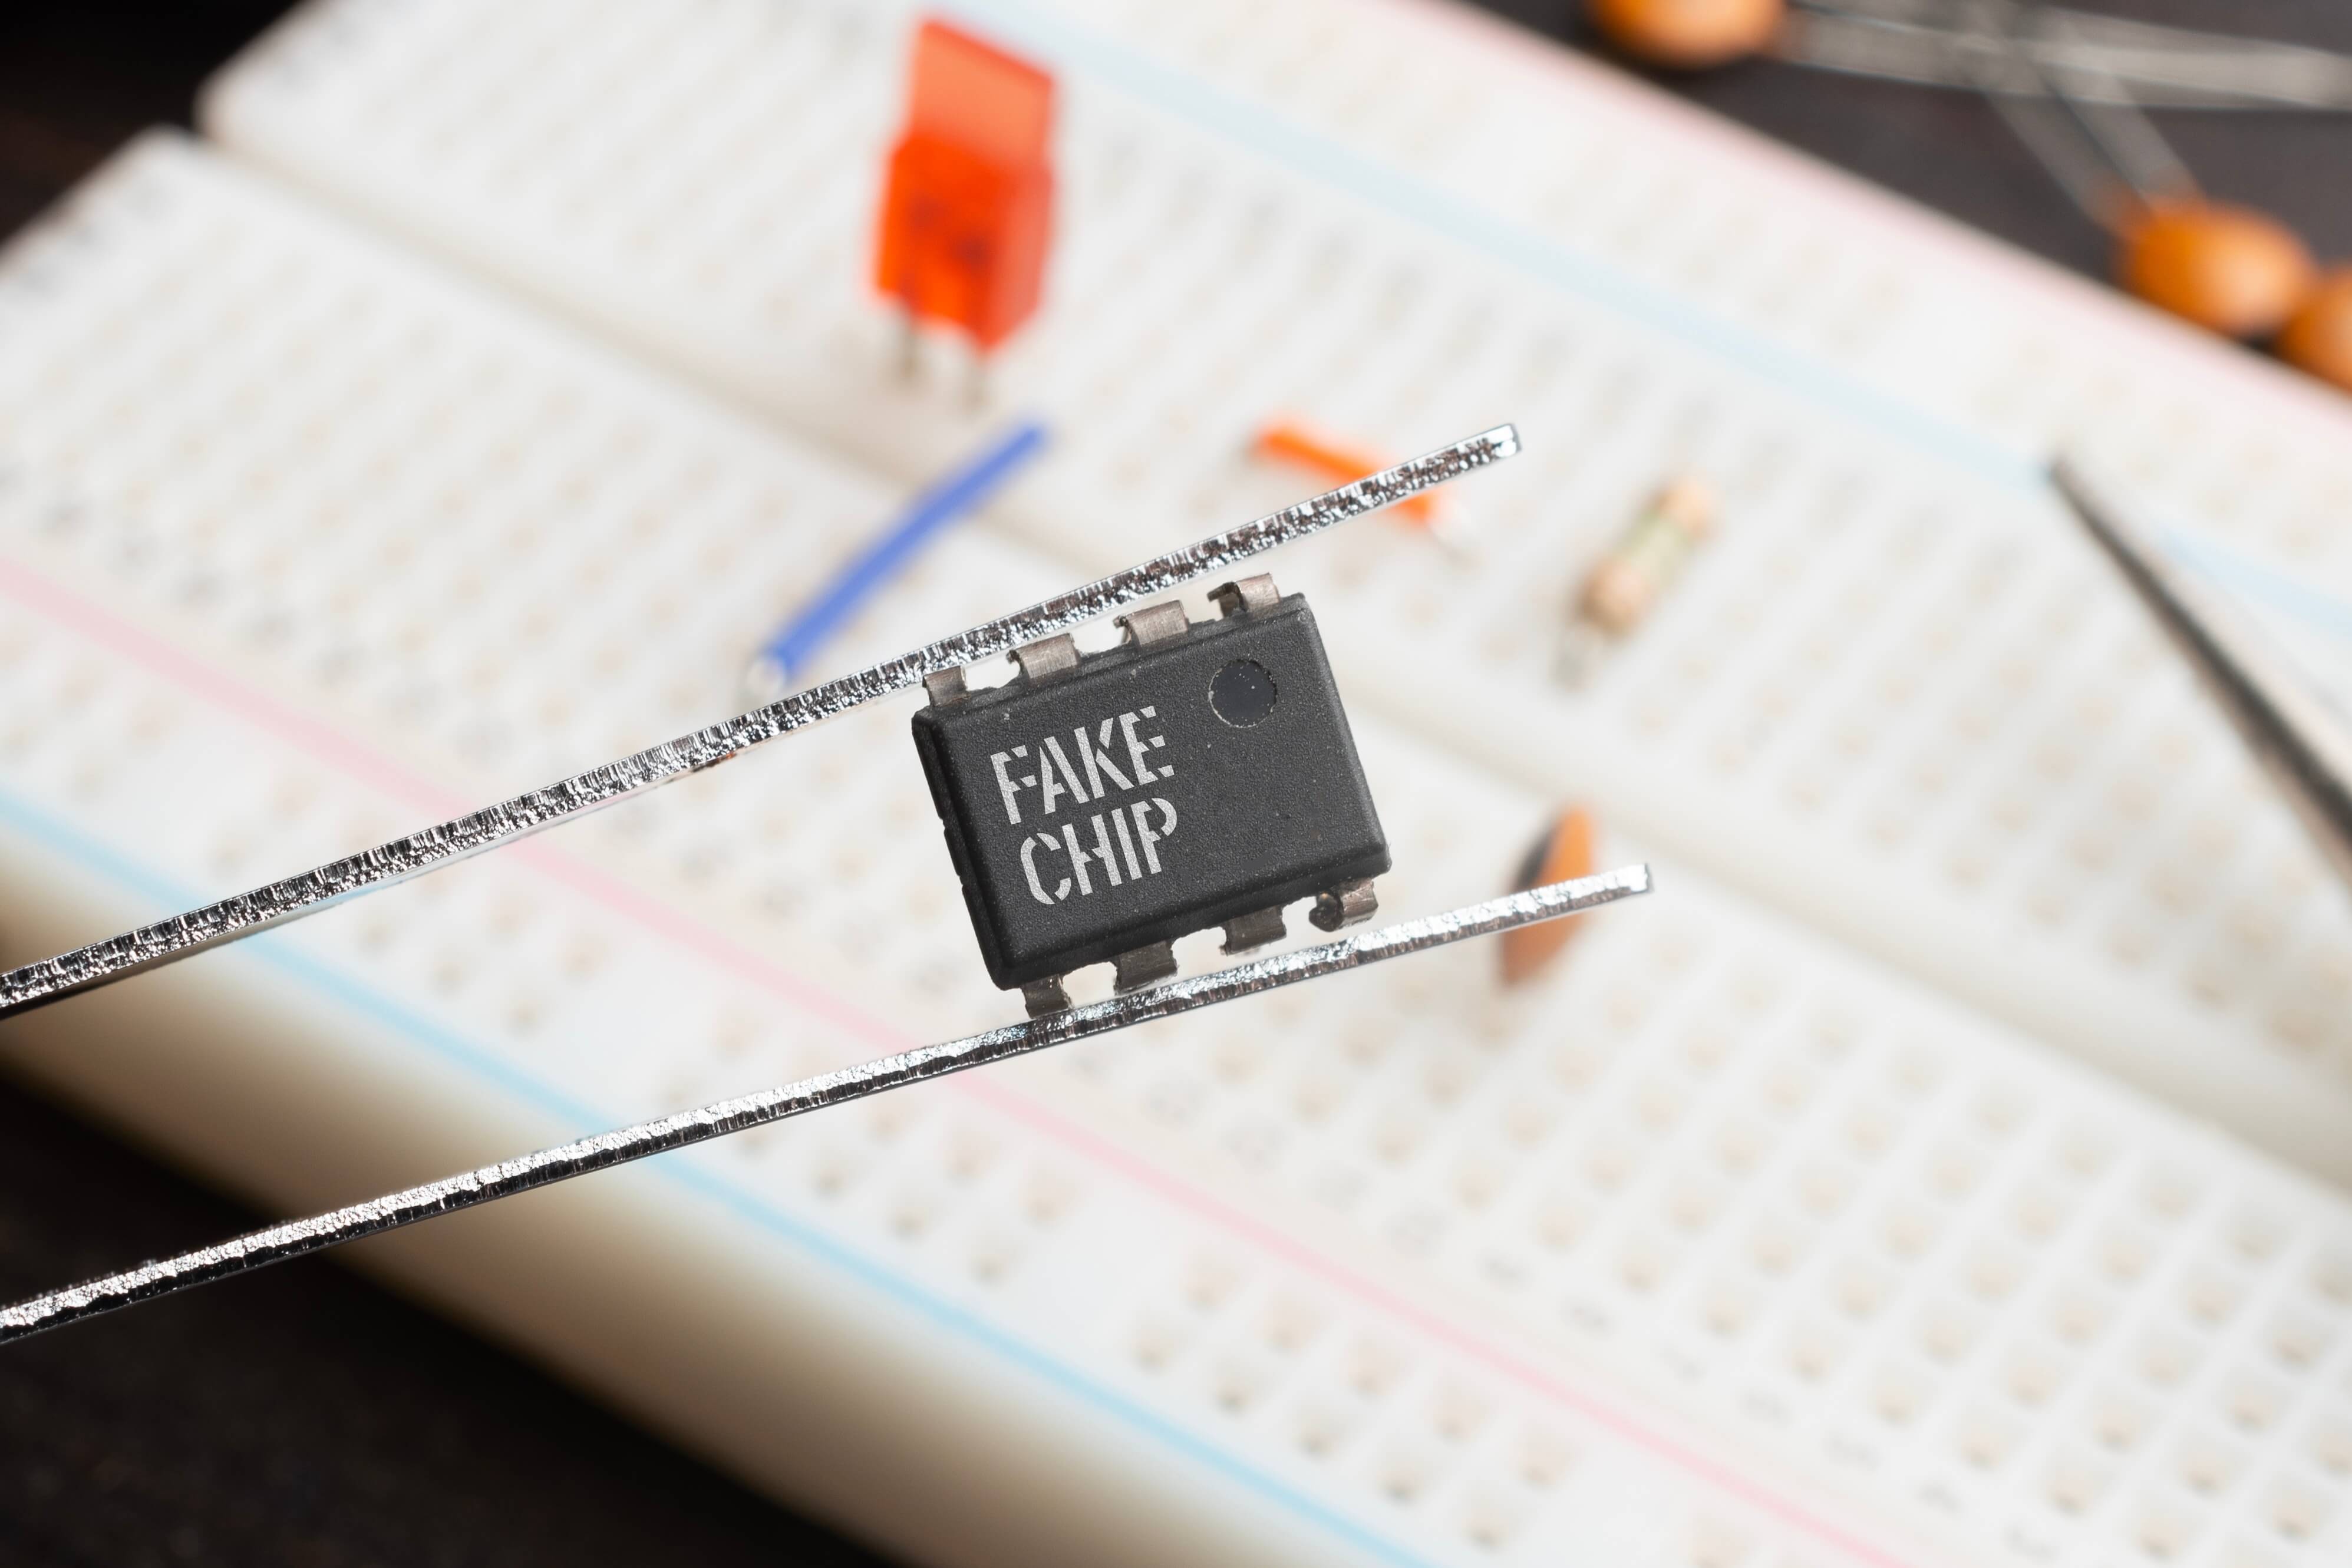 Fake microchip as brokerware in the test